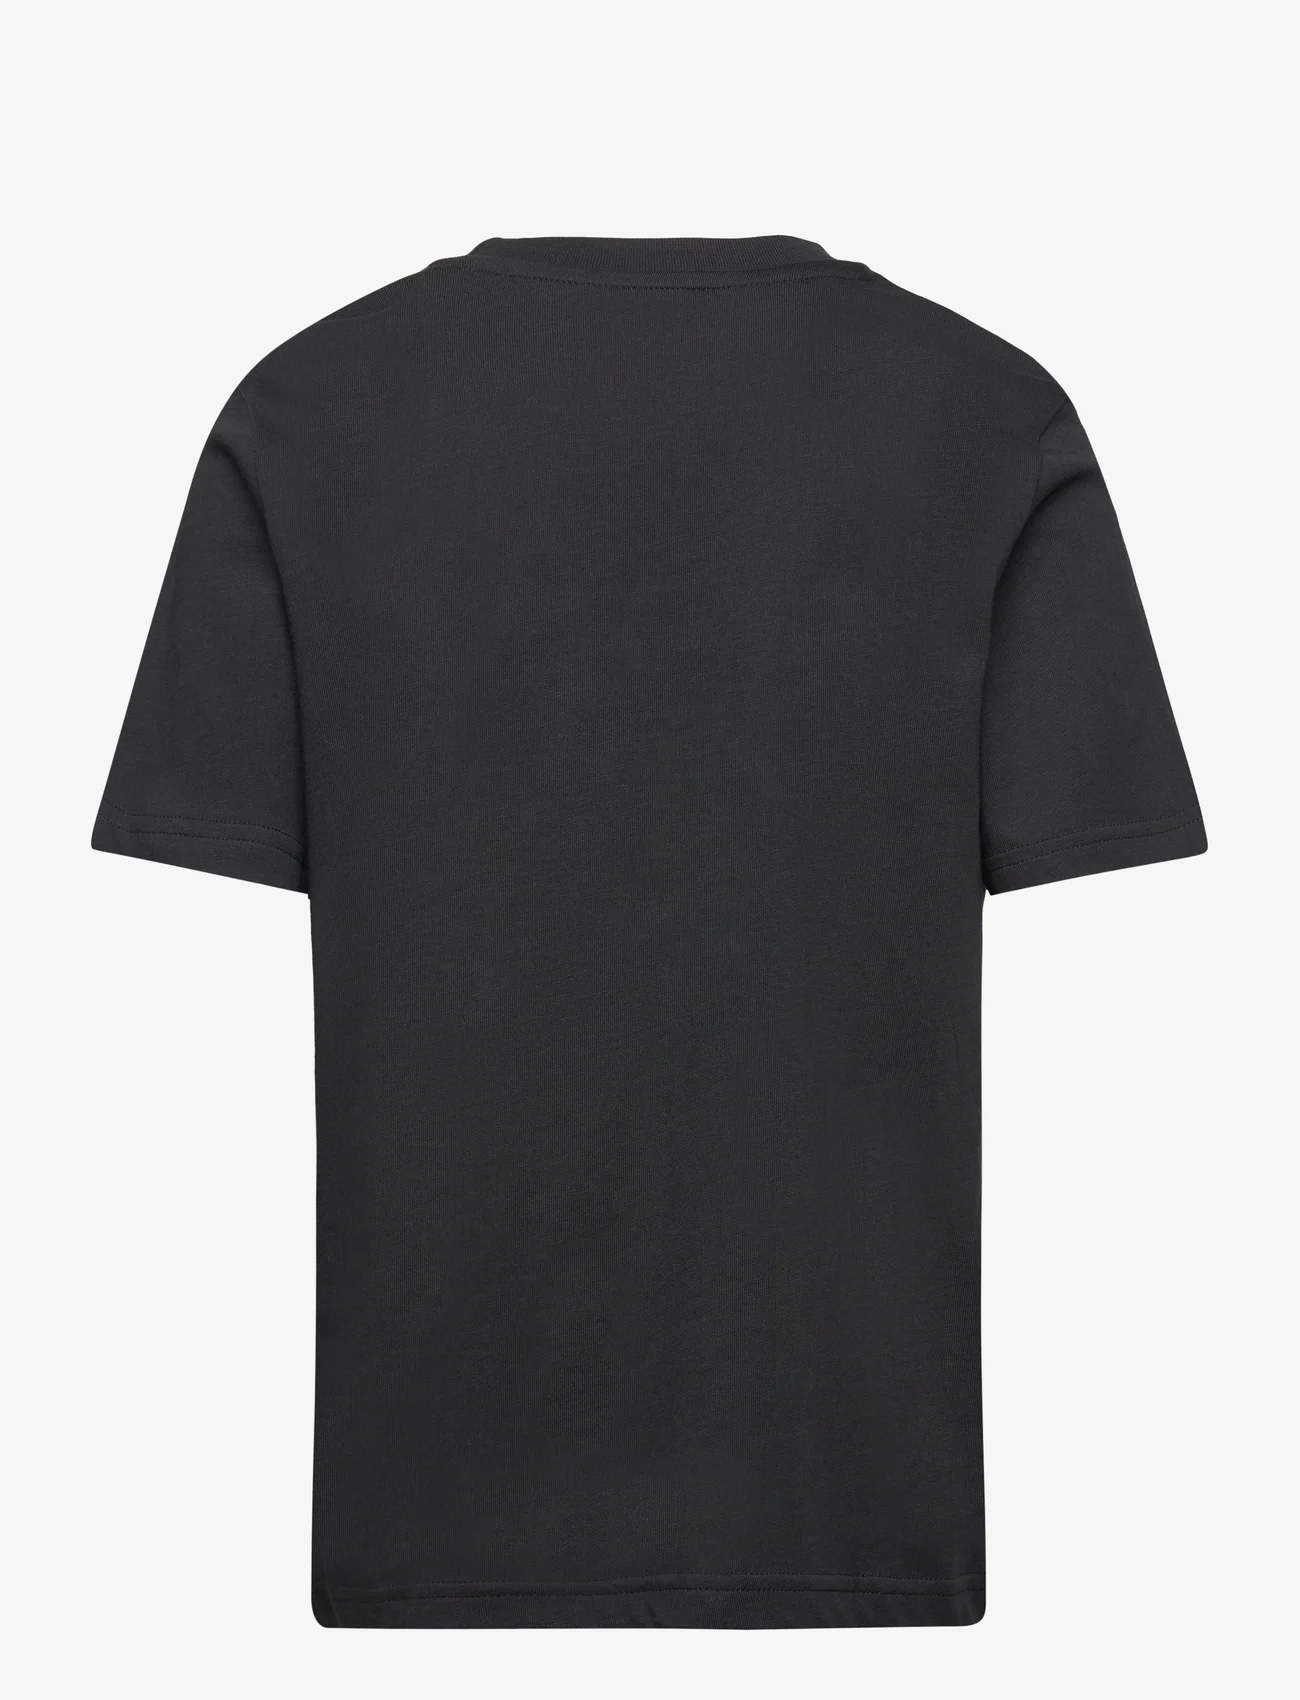 adidas Sportswear - B CAMO LIN T - short-sleeved t-shirts - black - 1